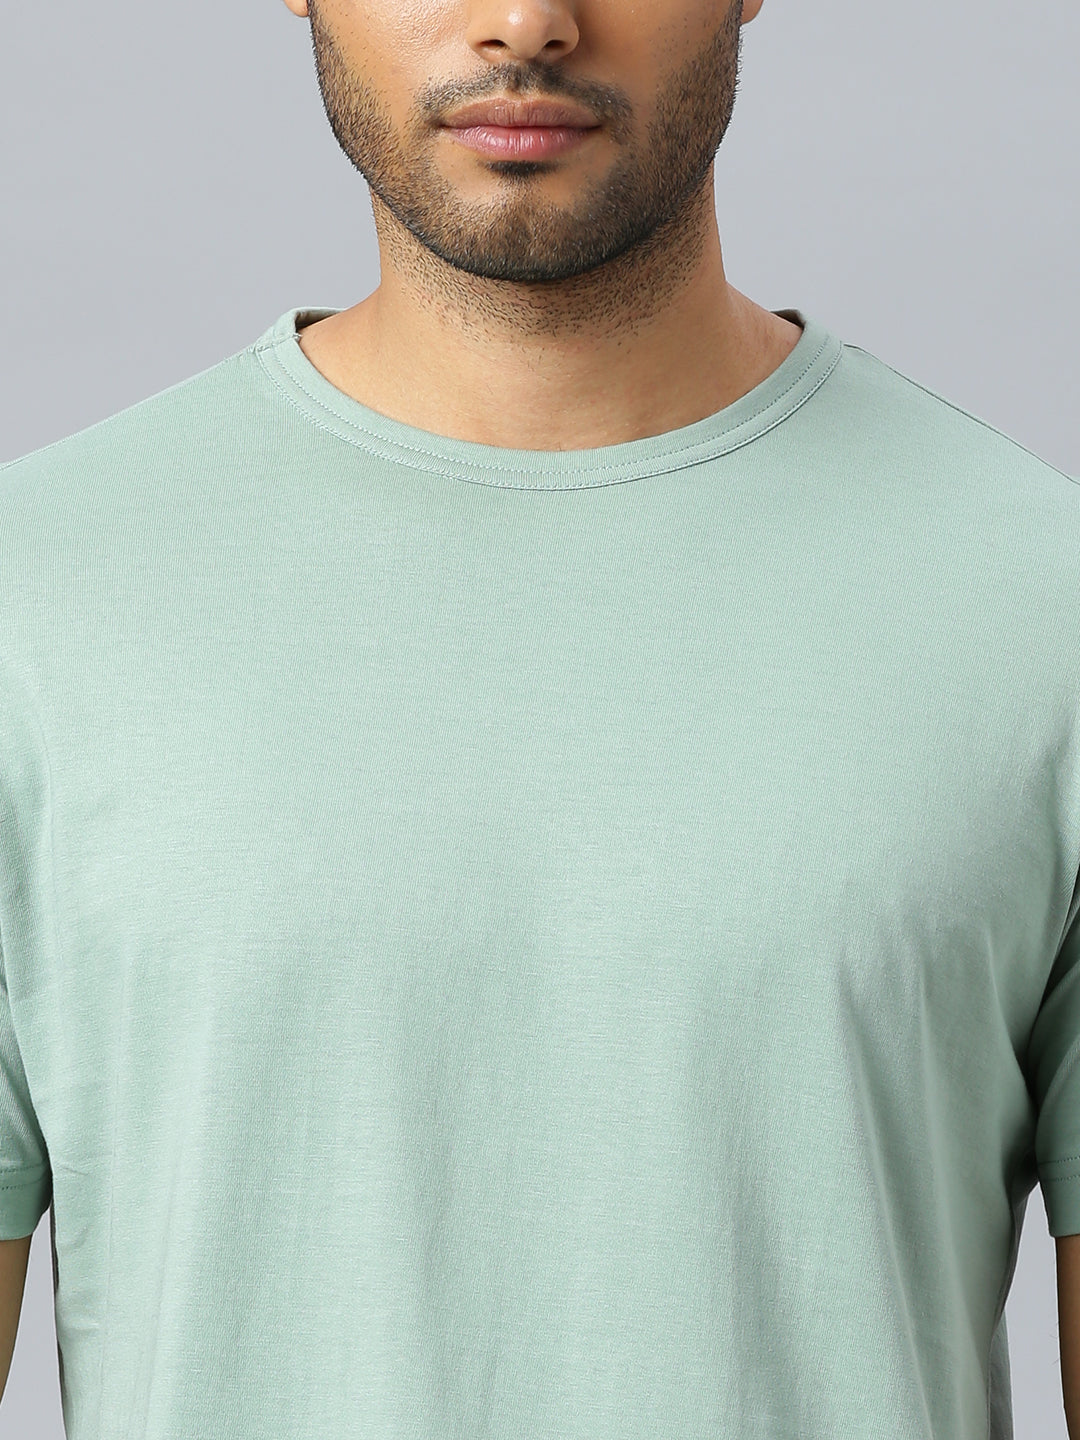 Don Vino Men's Solid Pista Green Crew Neck T-Shirt